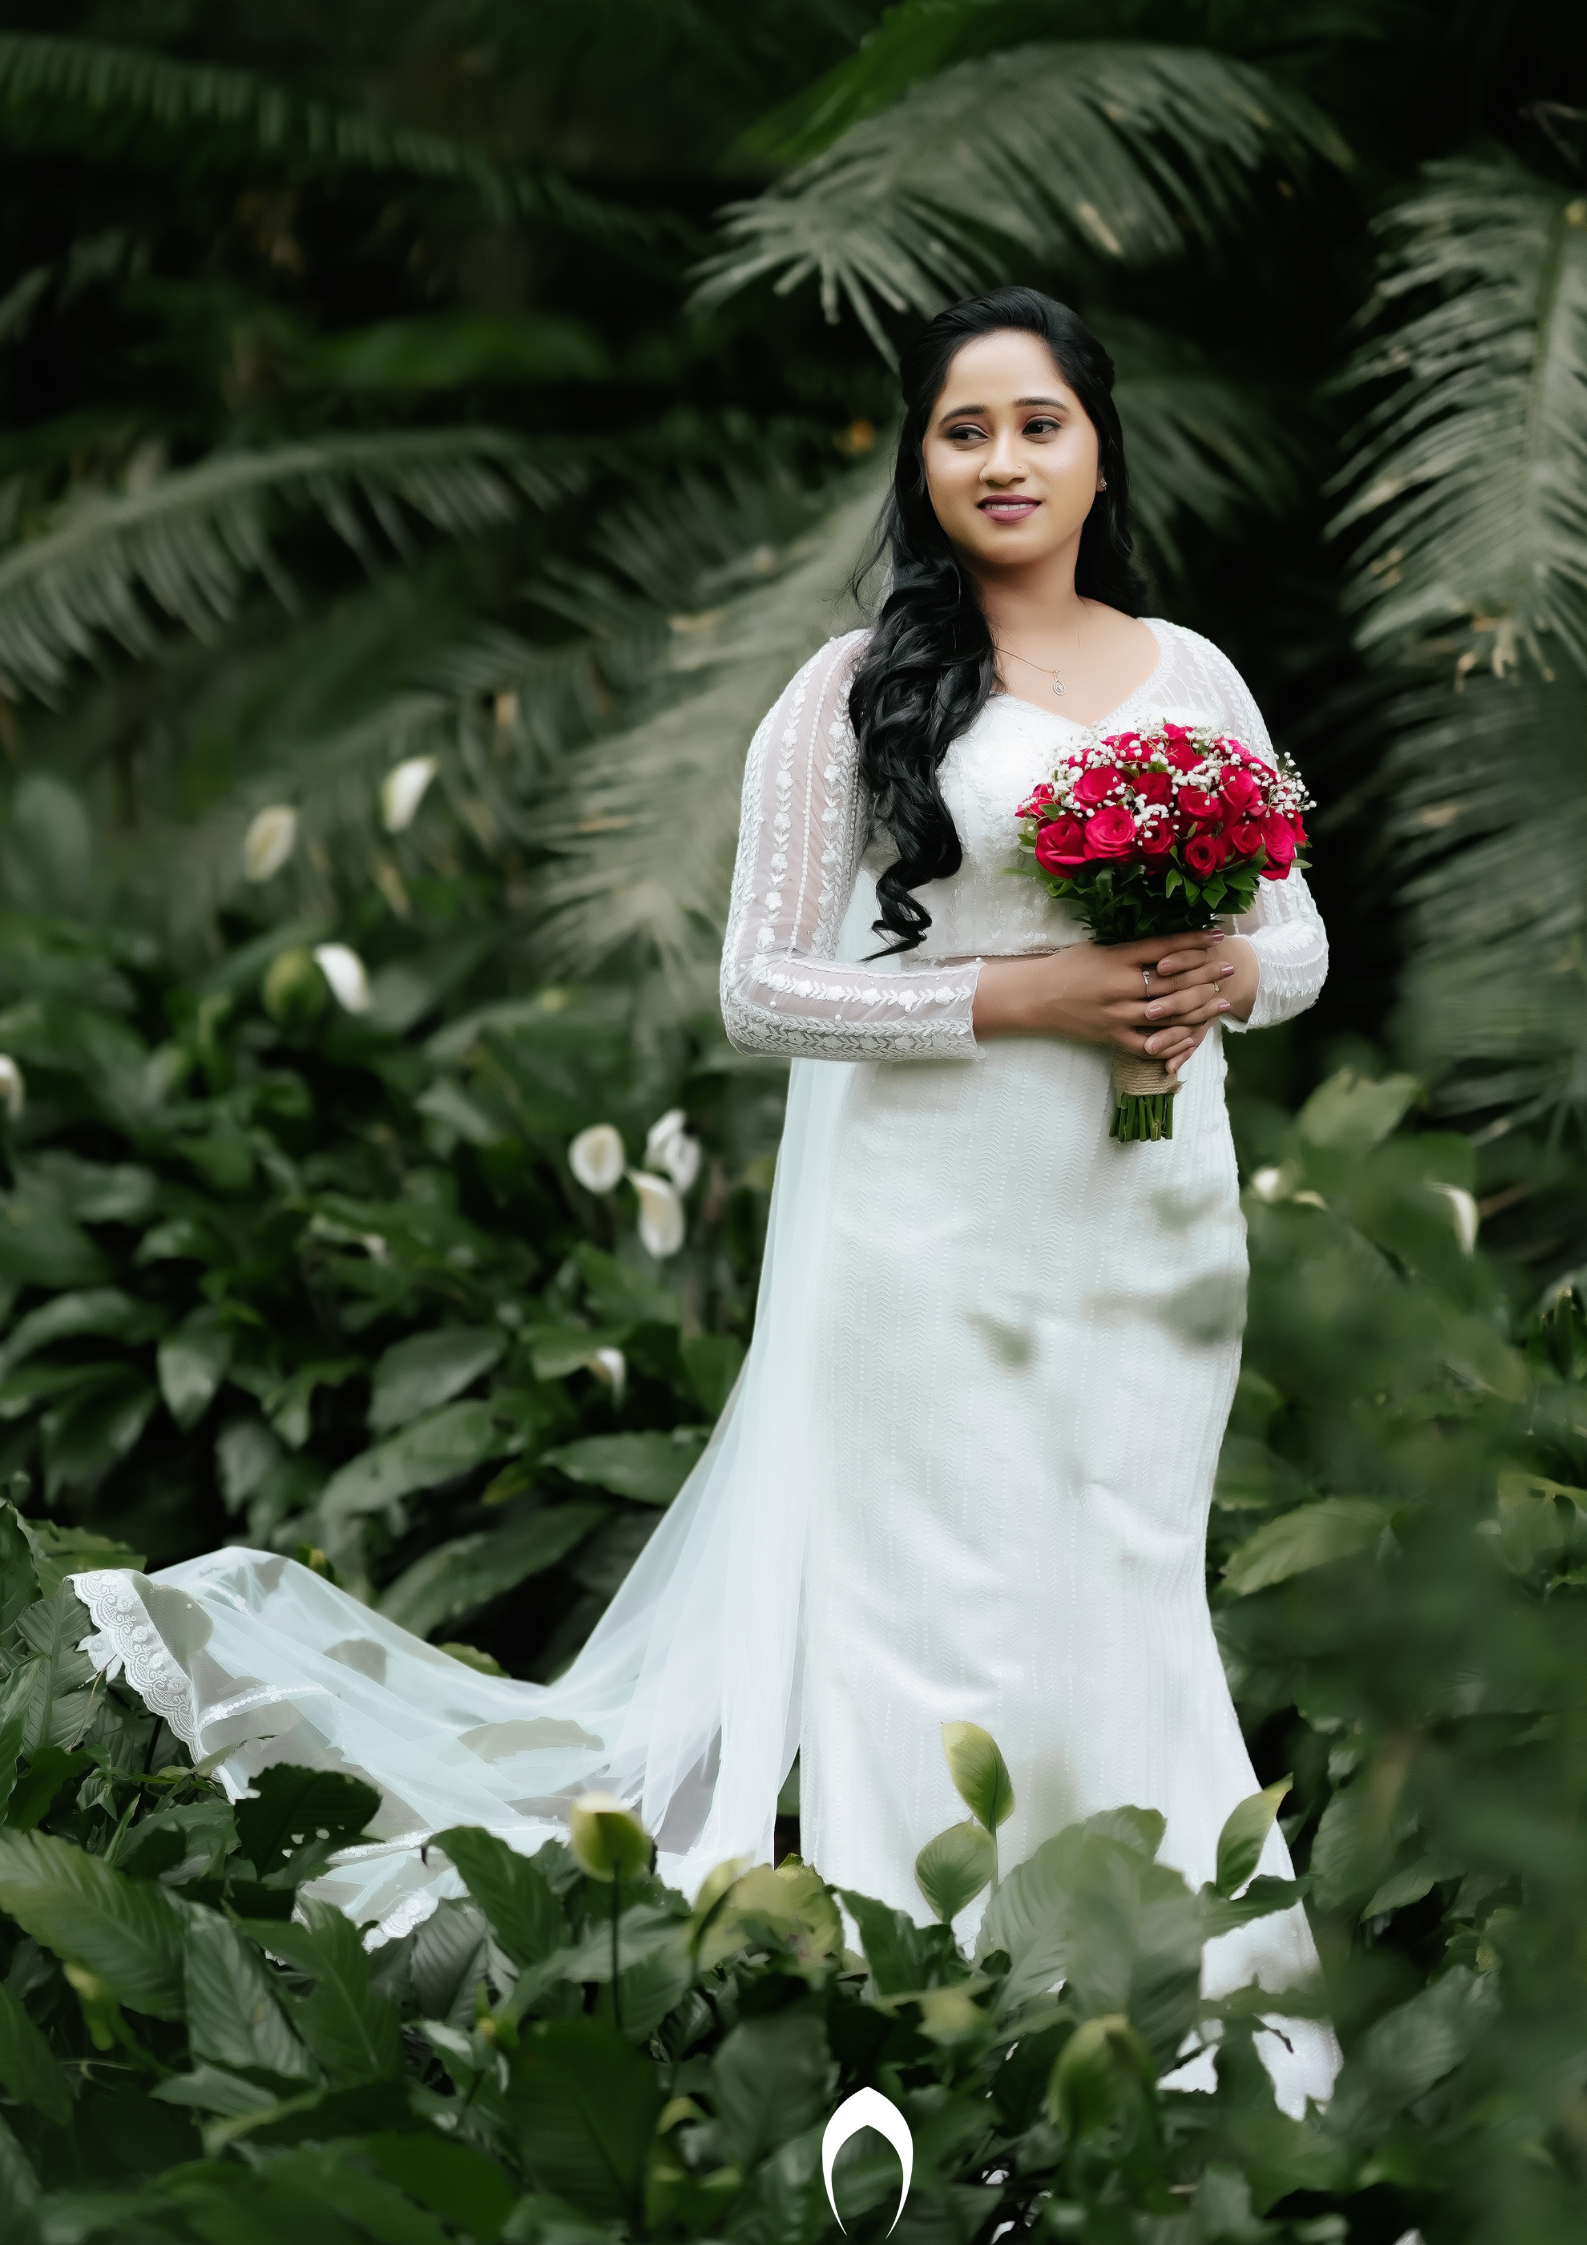 Wedding Gowns, Kerala Christian bridal gown designs, new stylish wedding  Christian dress - YouTube